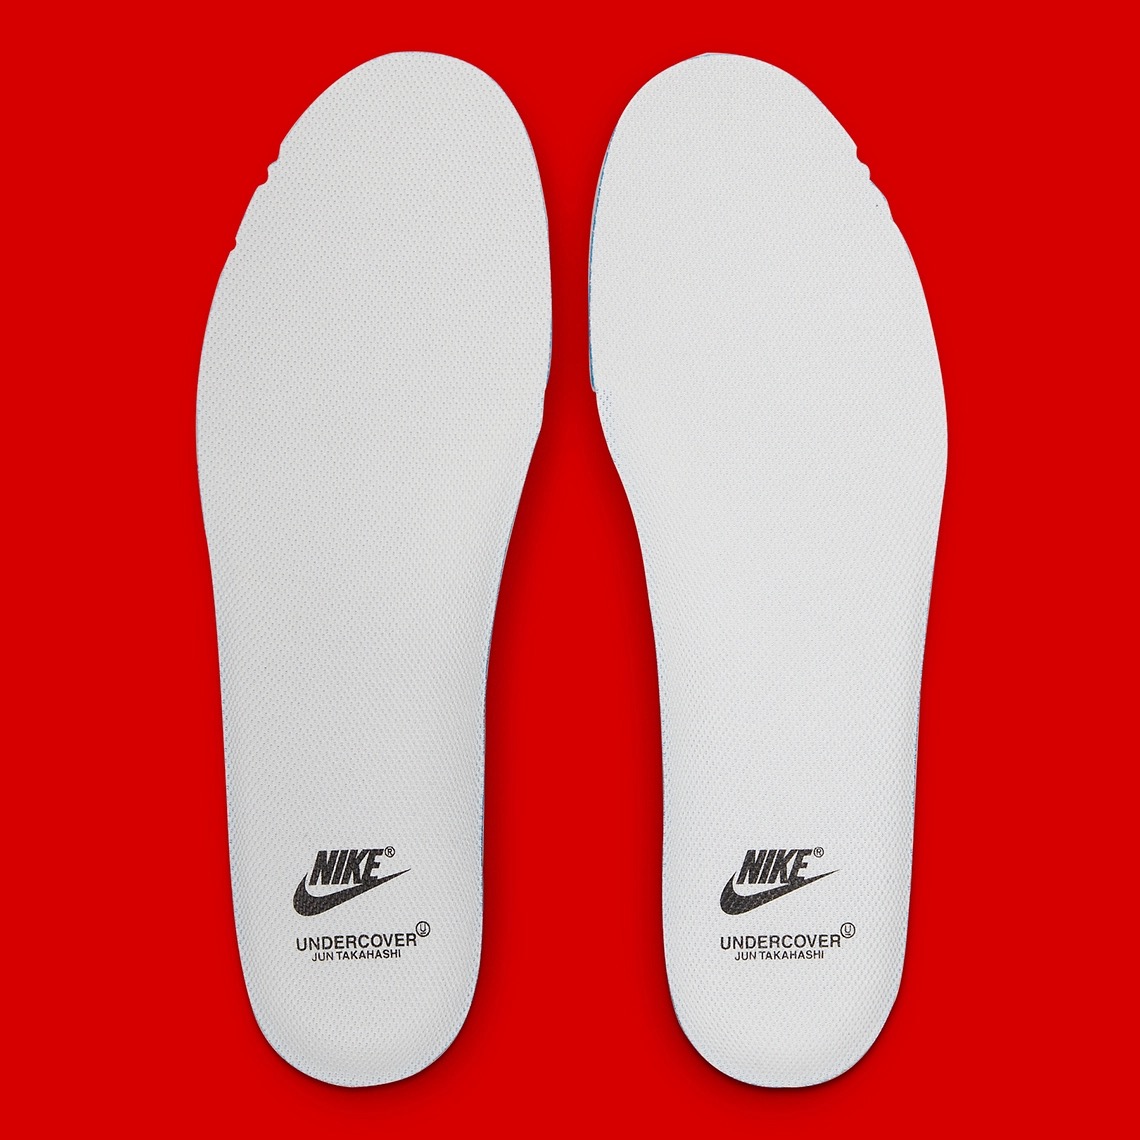 UNDERCOVER x Nike Moc Flow SP 全新合作鞋款释出